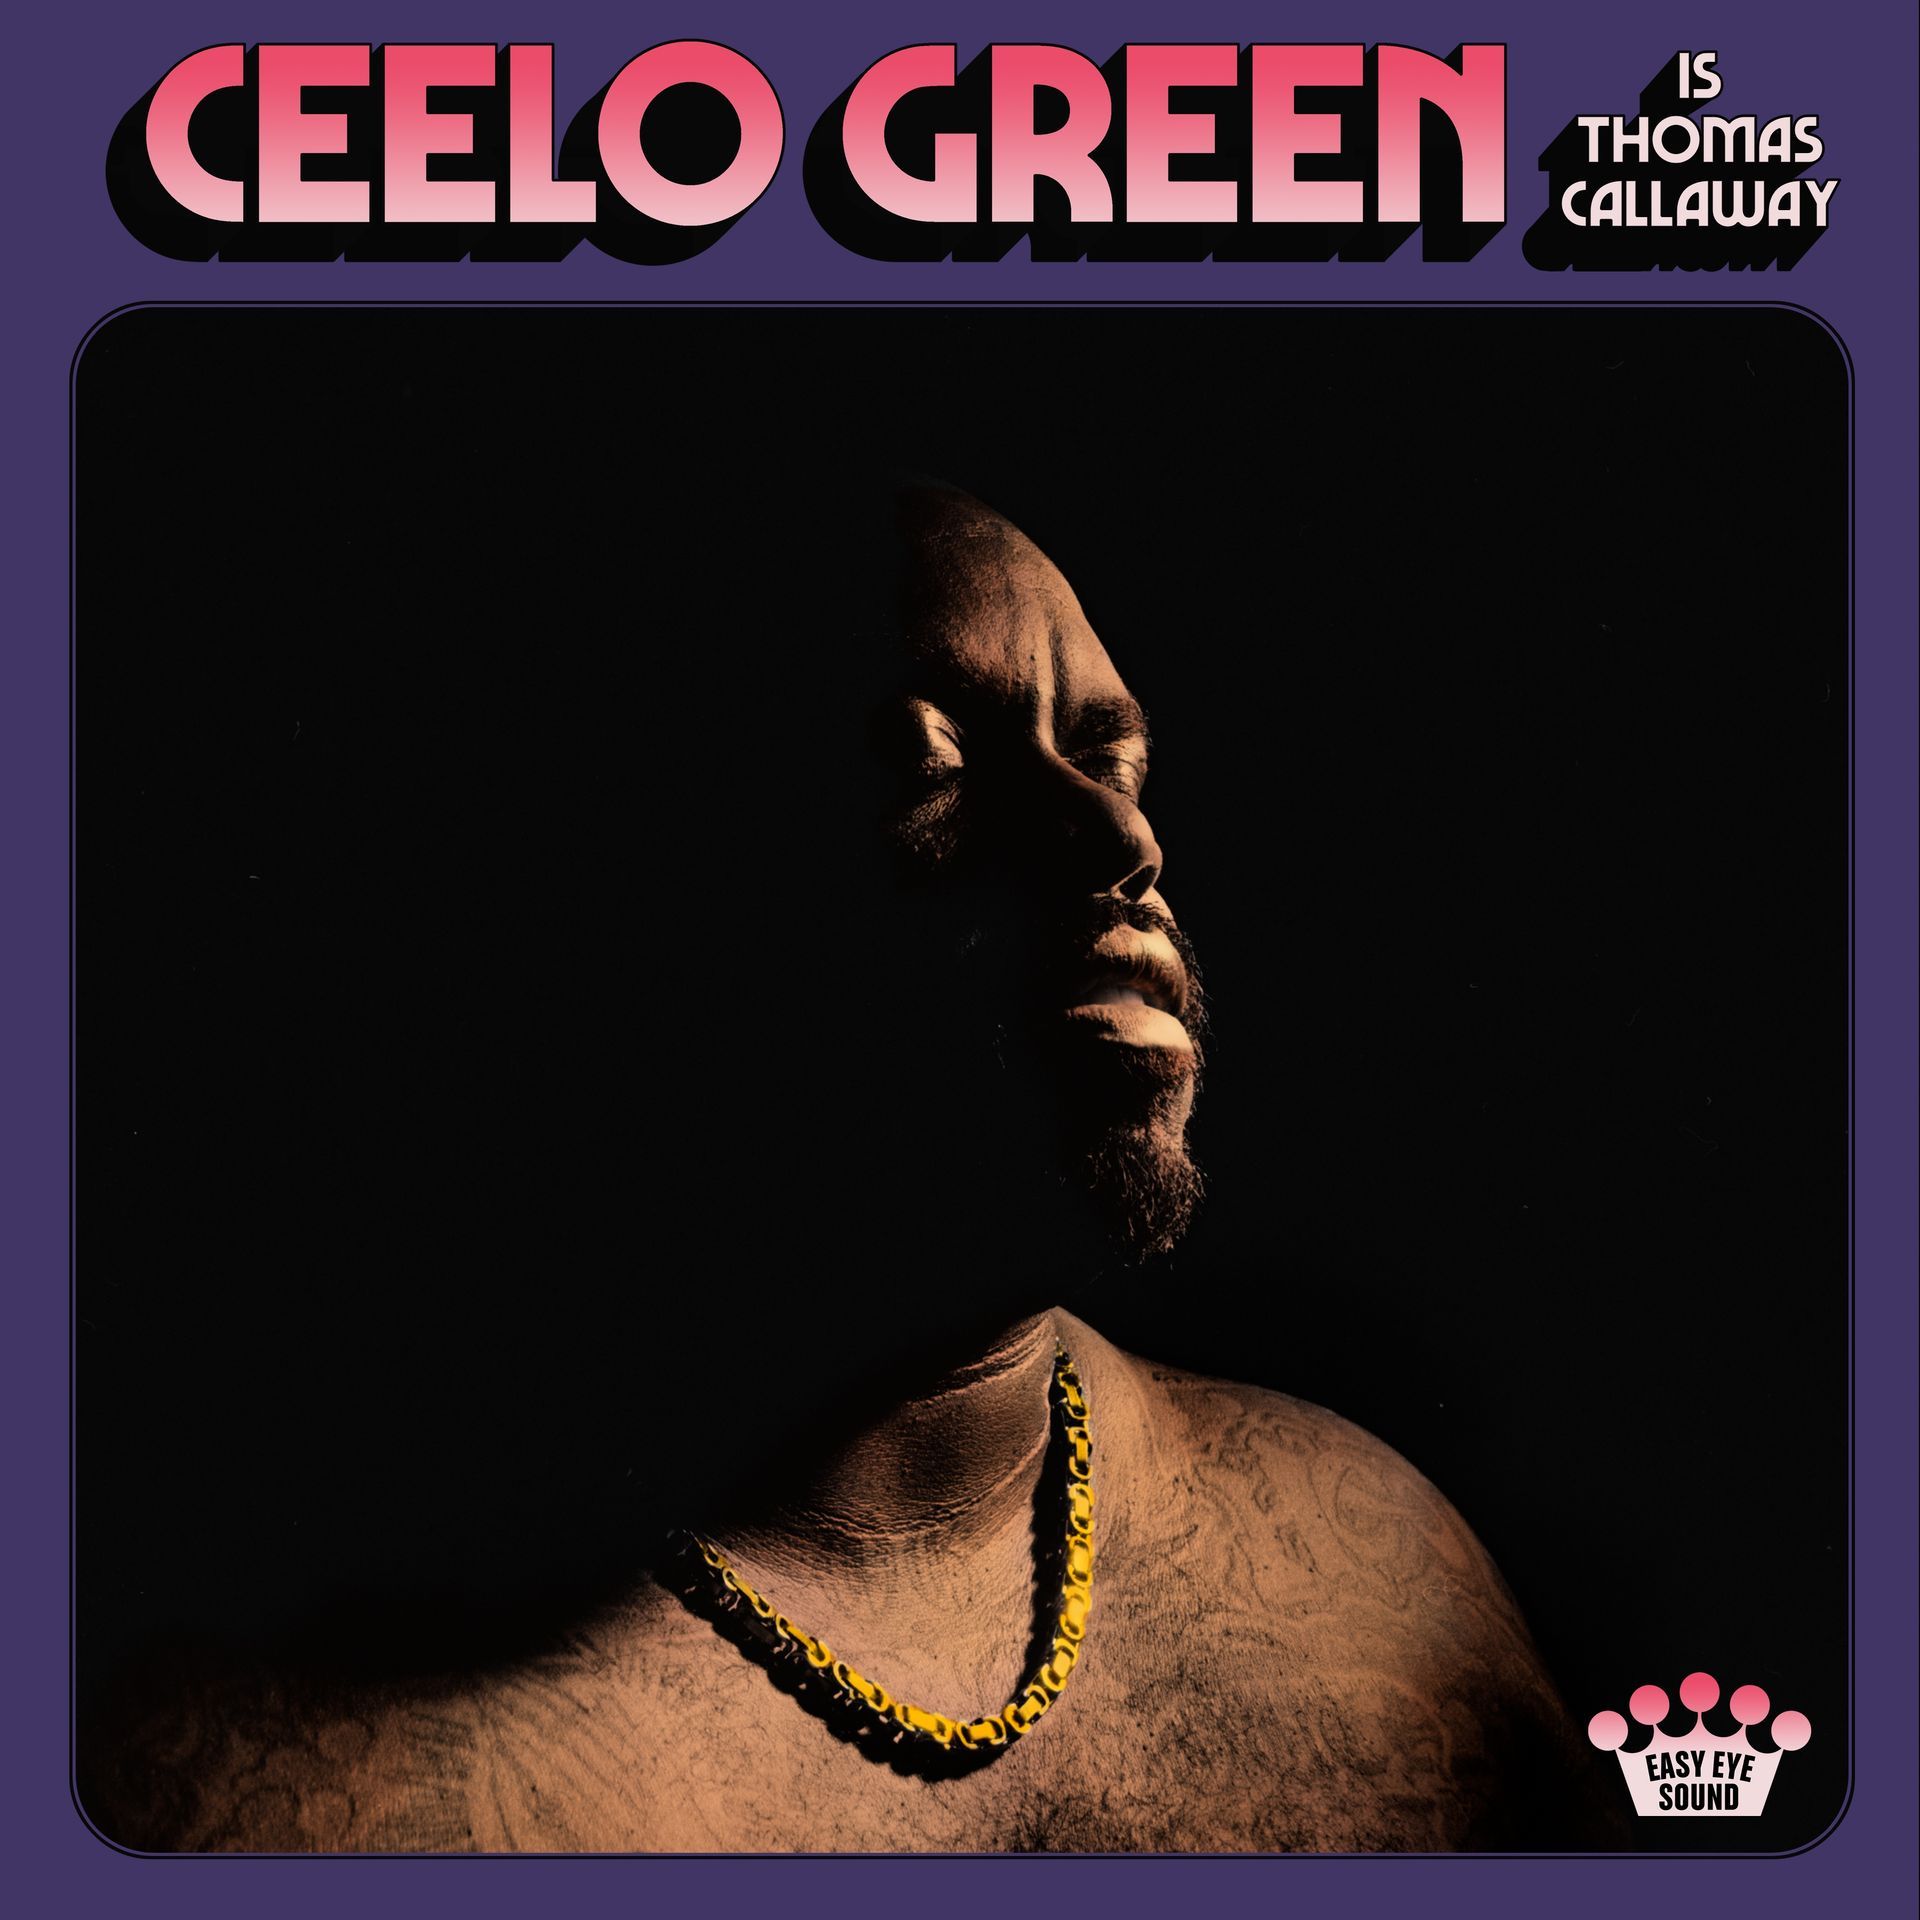 CeeLo Green Is Thomas Callaway album art